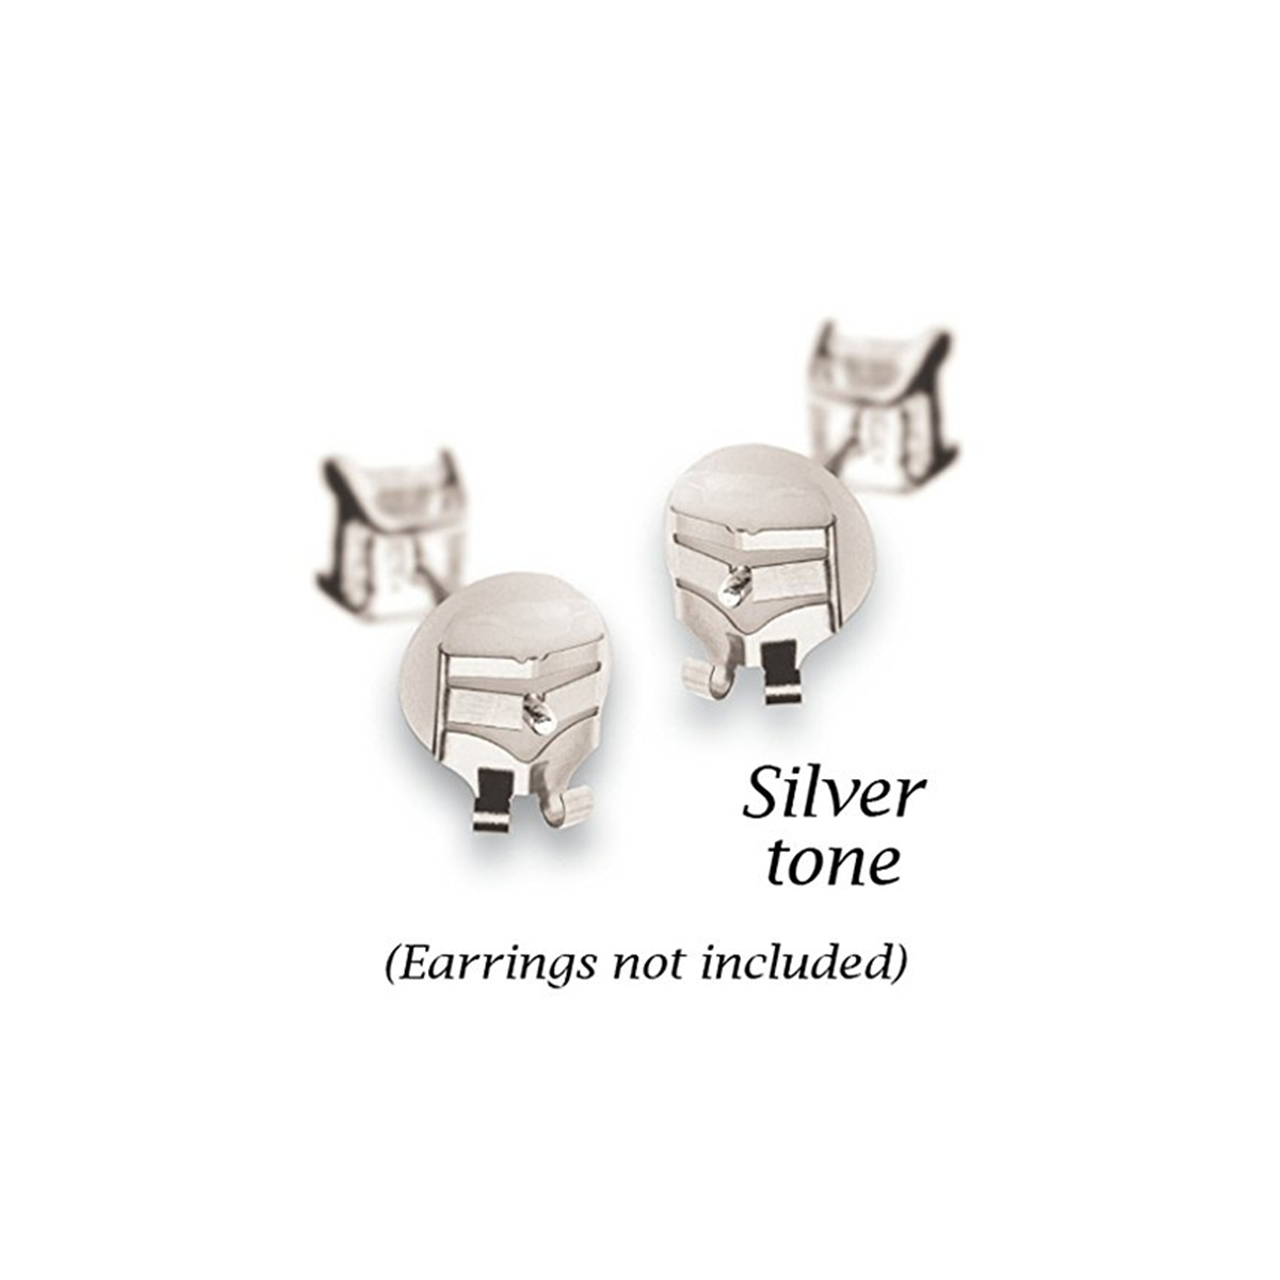 Lox Earring Backs - Silver Tone - 2 Pairs